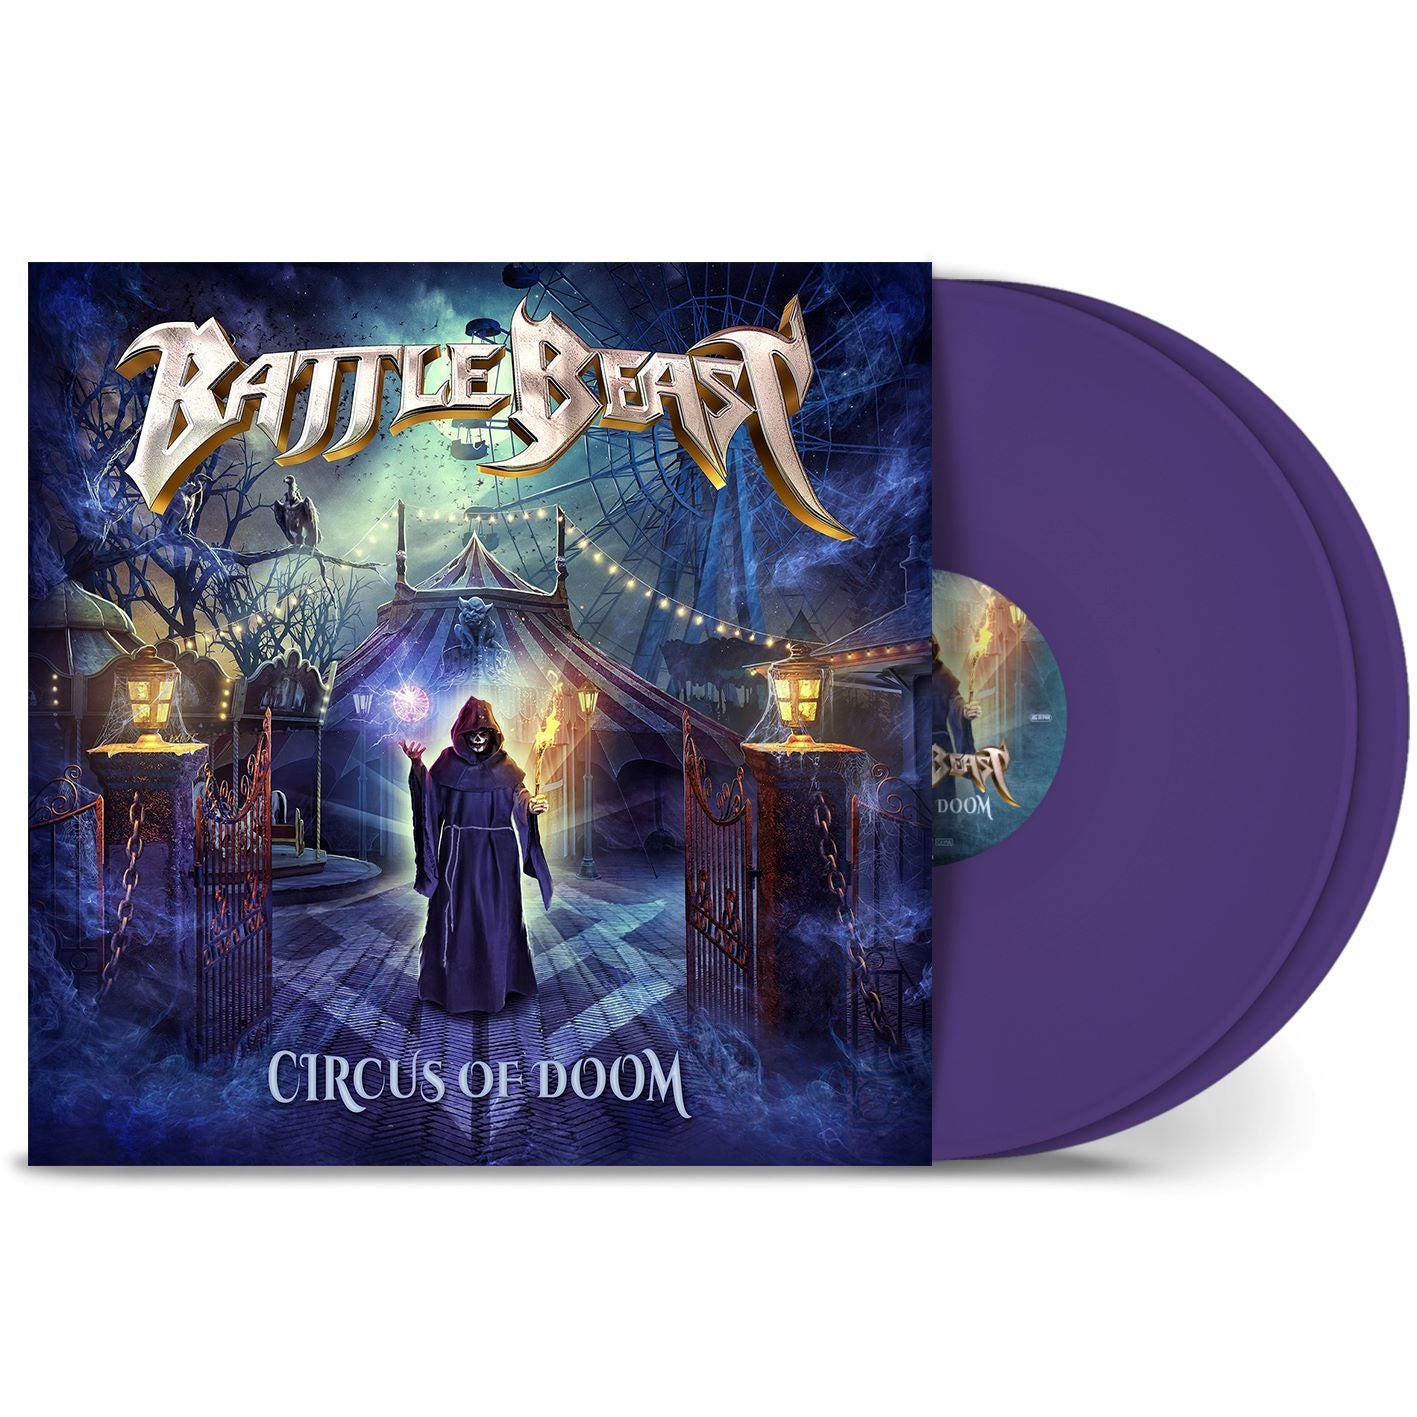 Battle Beast "Circus Of Doom" 2x12" Purple Vinyl - PRE-ORDER